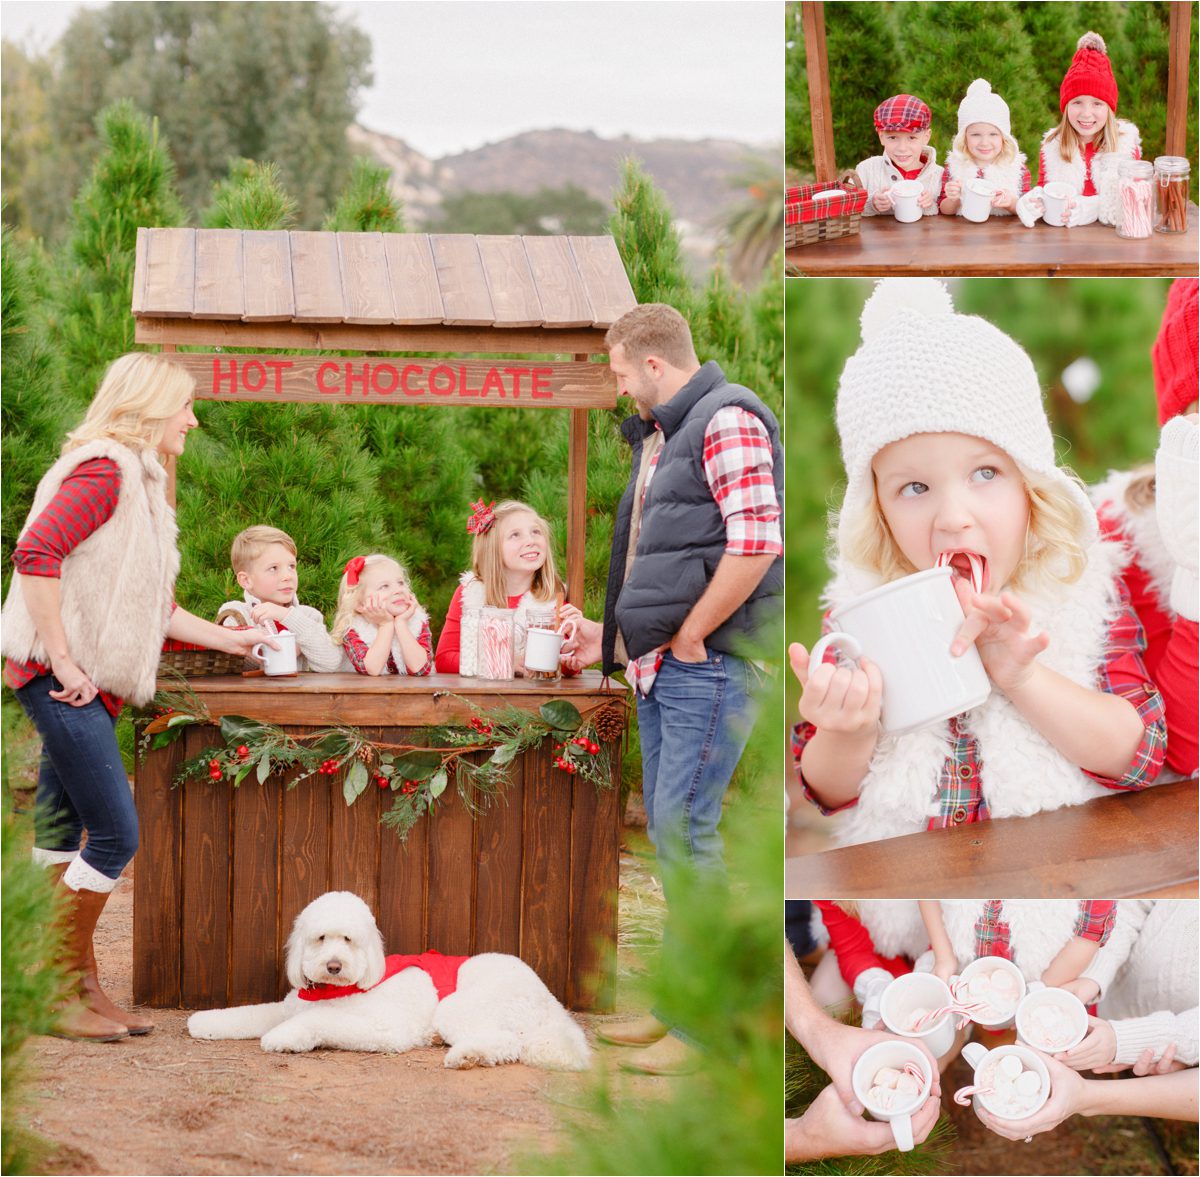 Family Christmas family photos at tree farm with hot cocoa stand